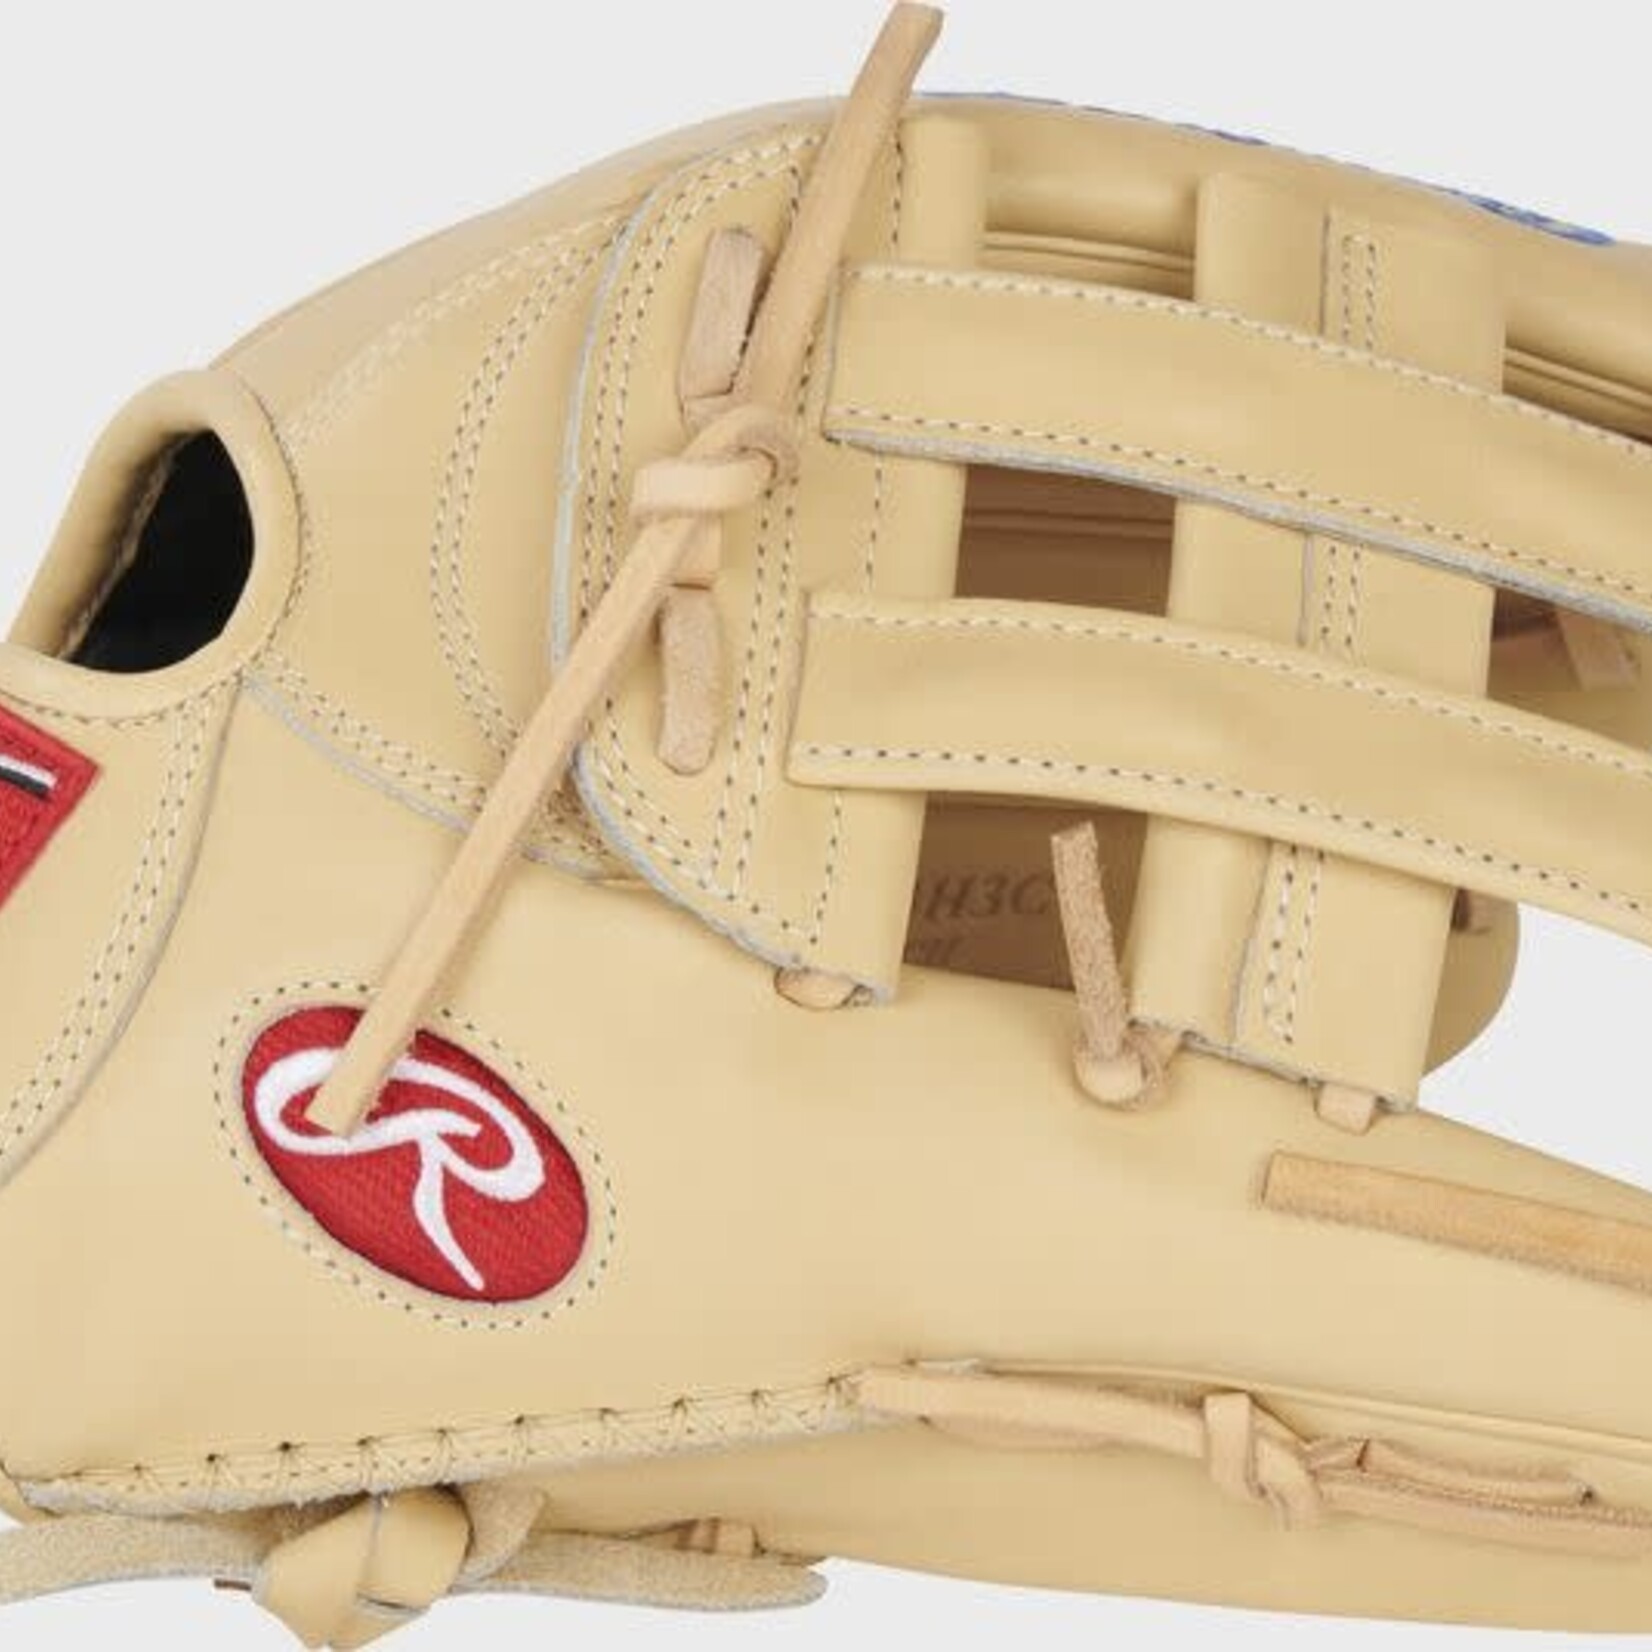 Rawlings Rawlings Baseball Glove, Heart of the Hide PROBH3C, Bryce Harper Pattern, 13”, Reg